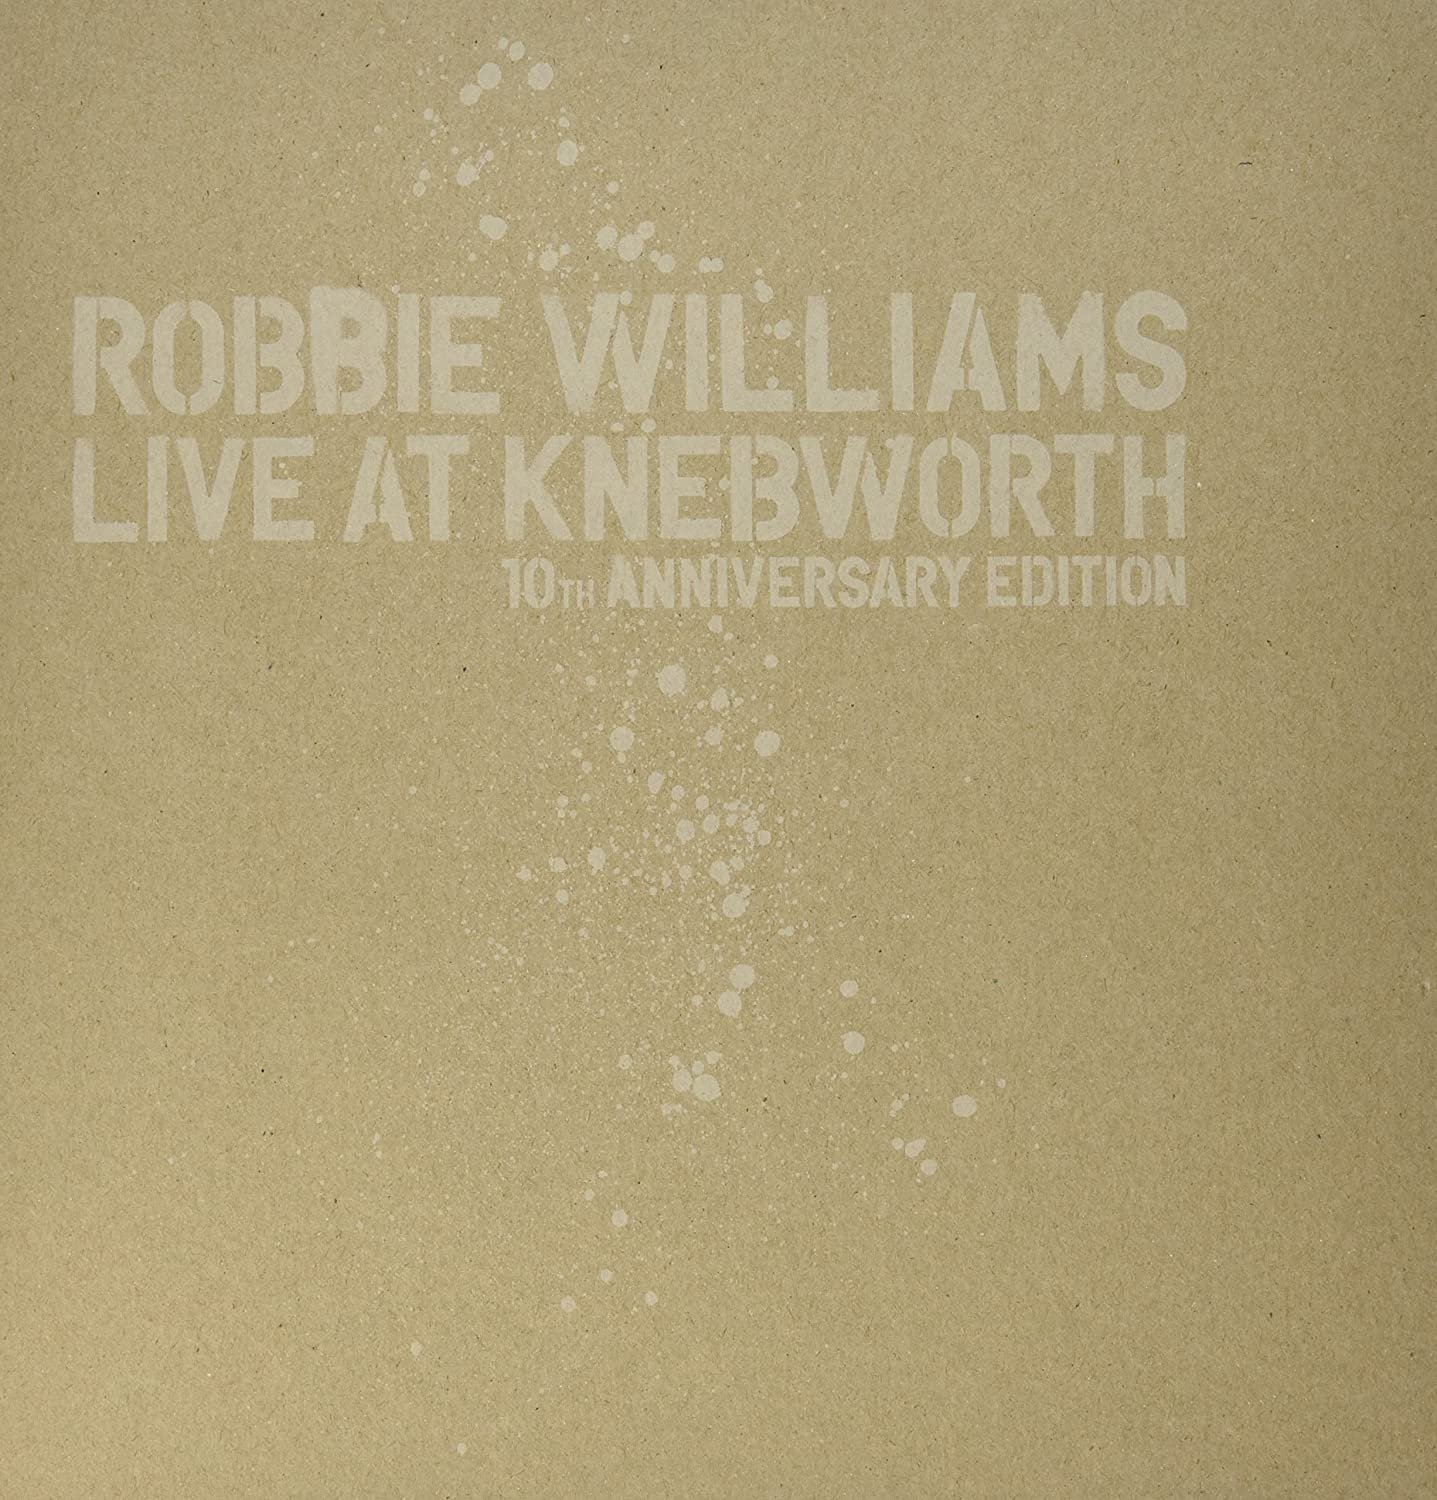 Live at Knebworth - 10th Anniversary Edition